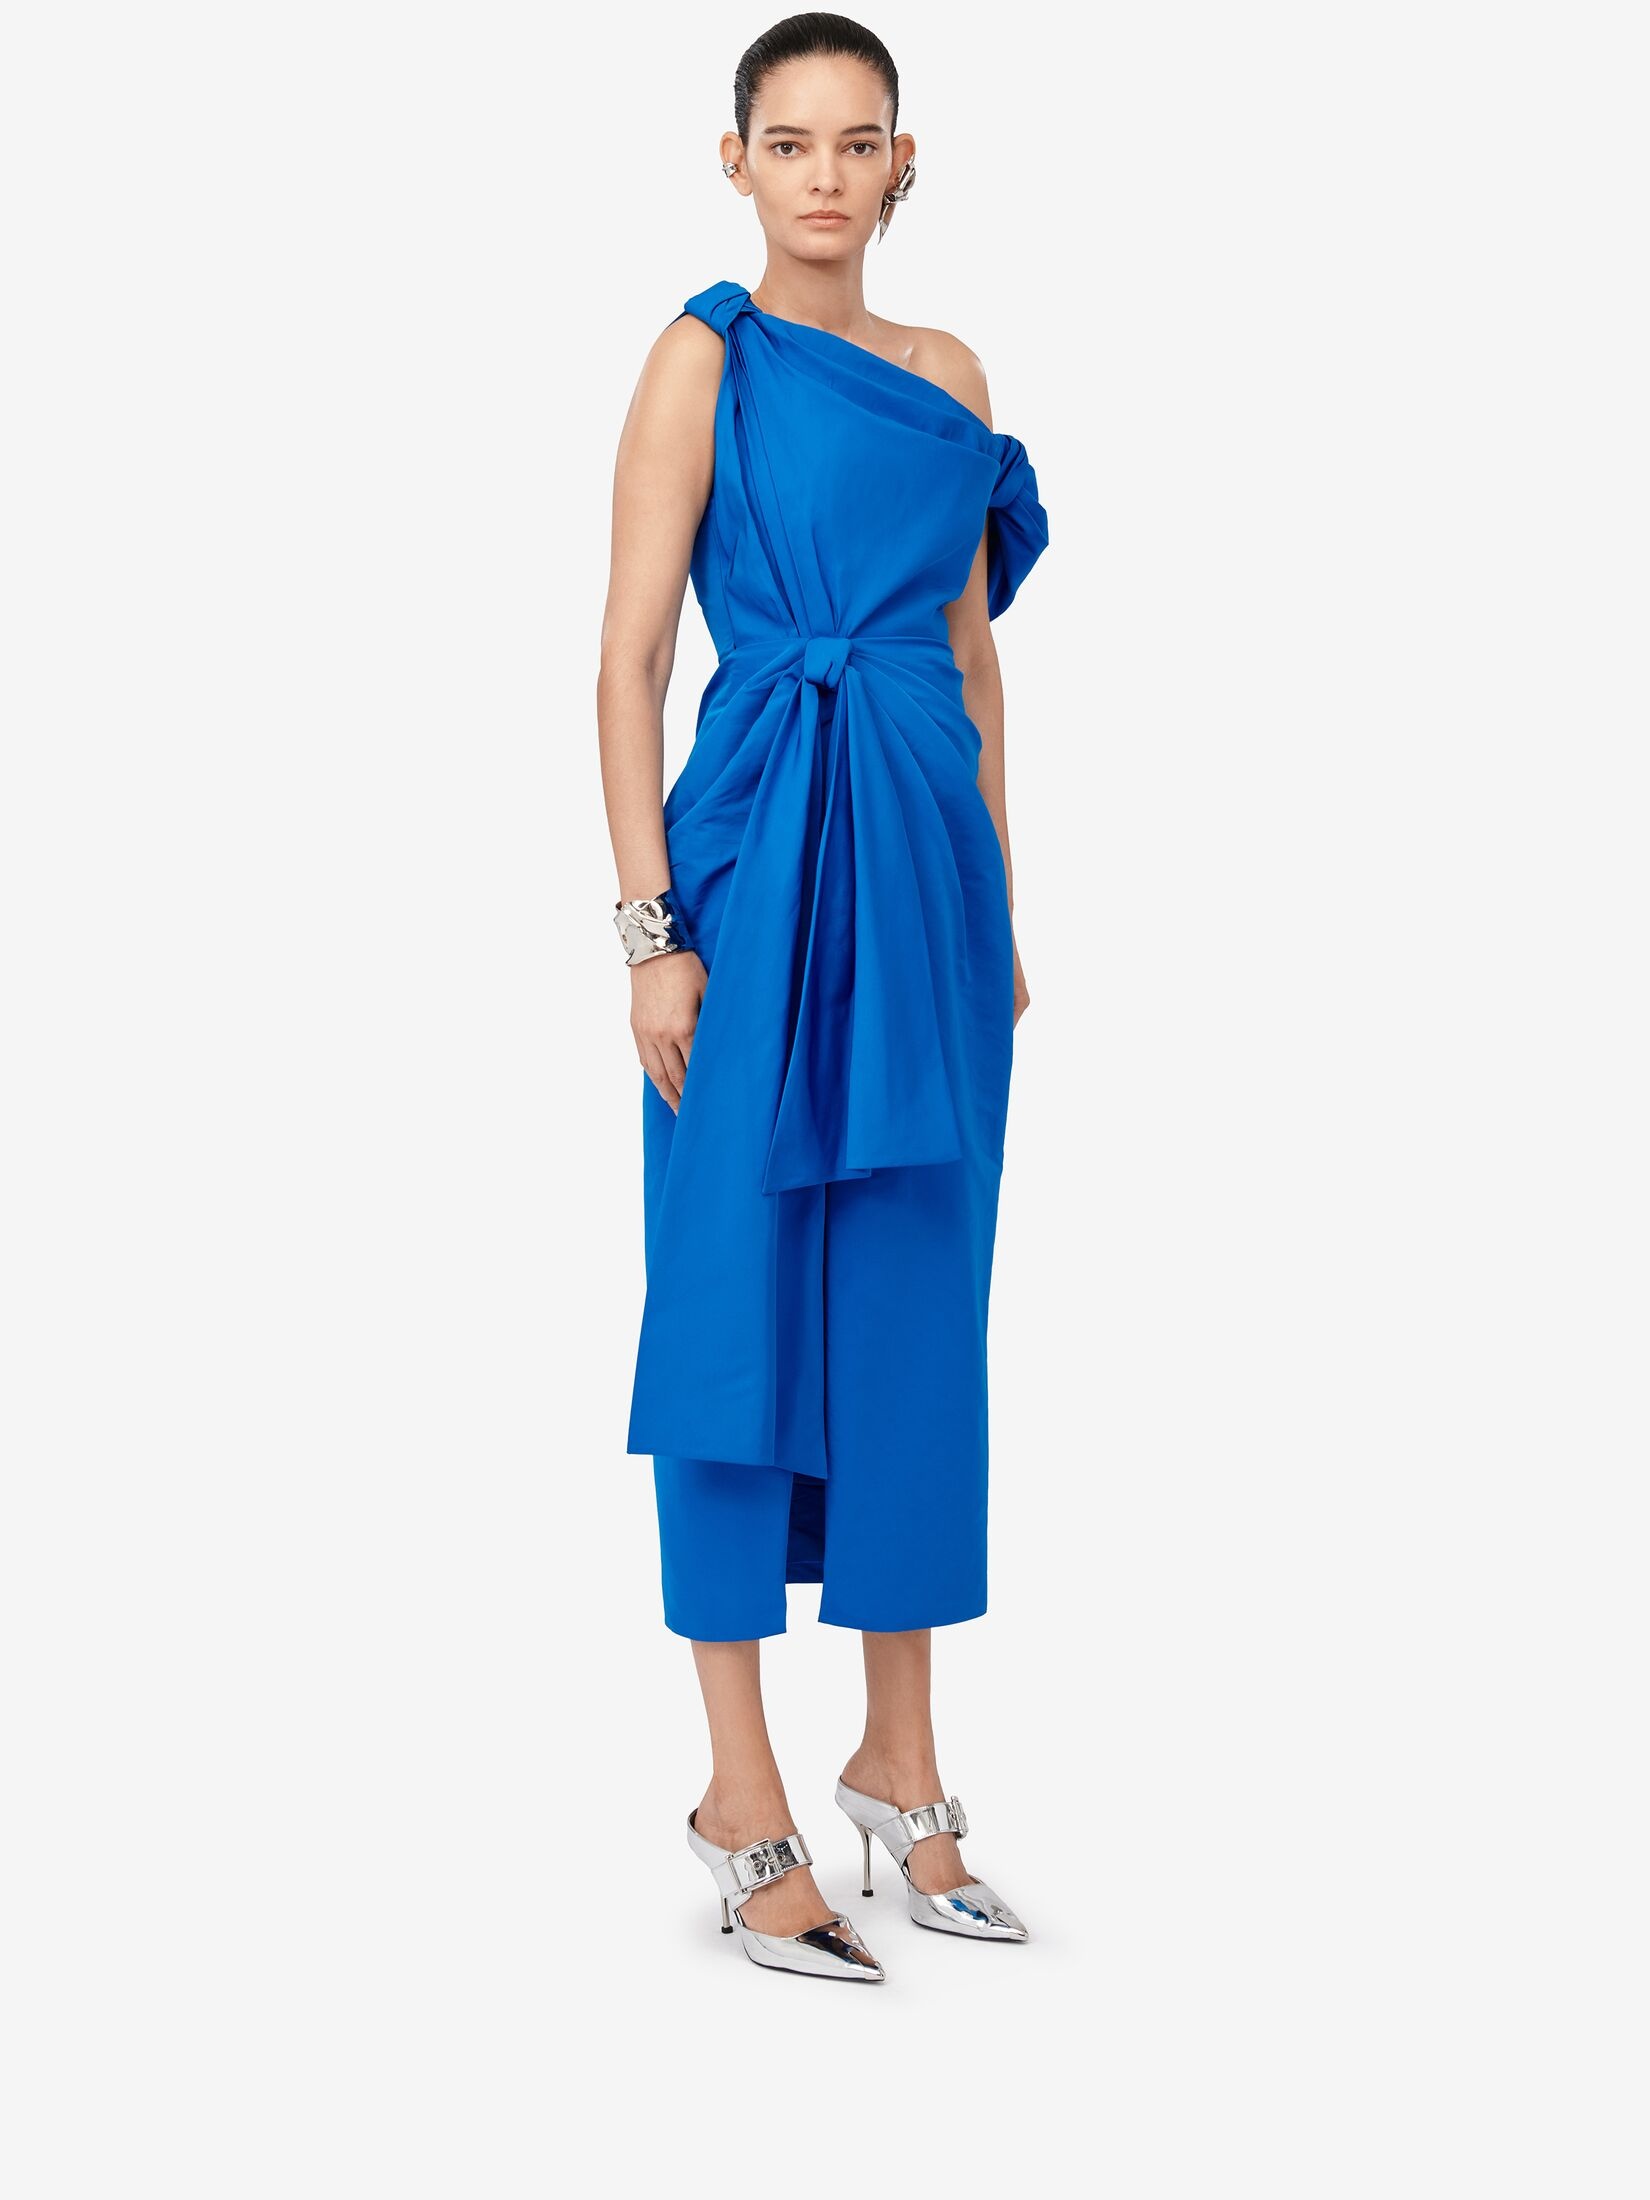 Women's Knotted Asymmetric Pencil Dress in Lapis Blue - 3